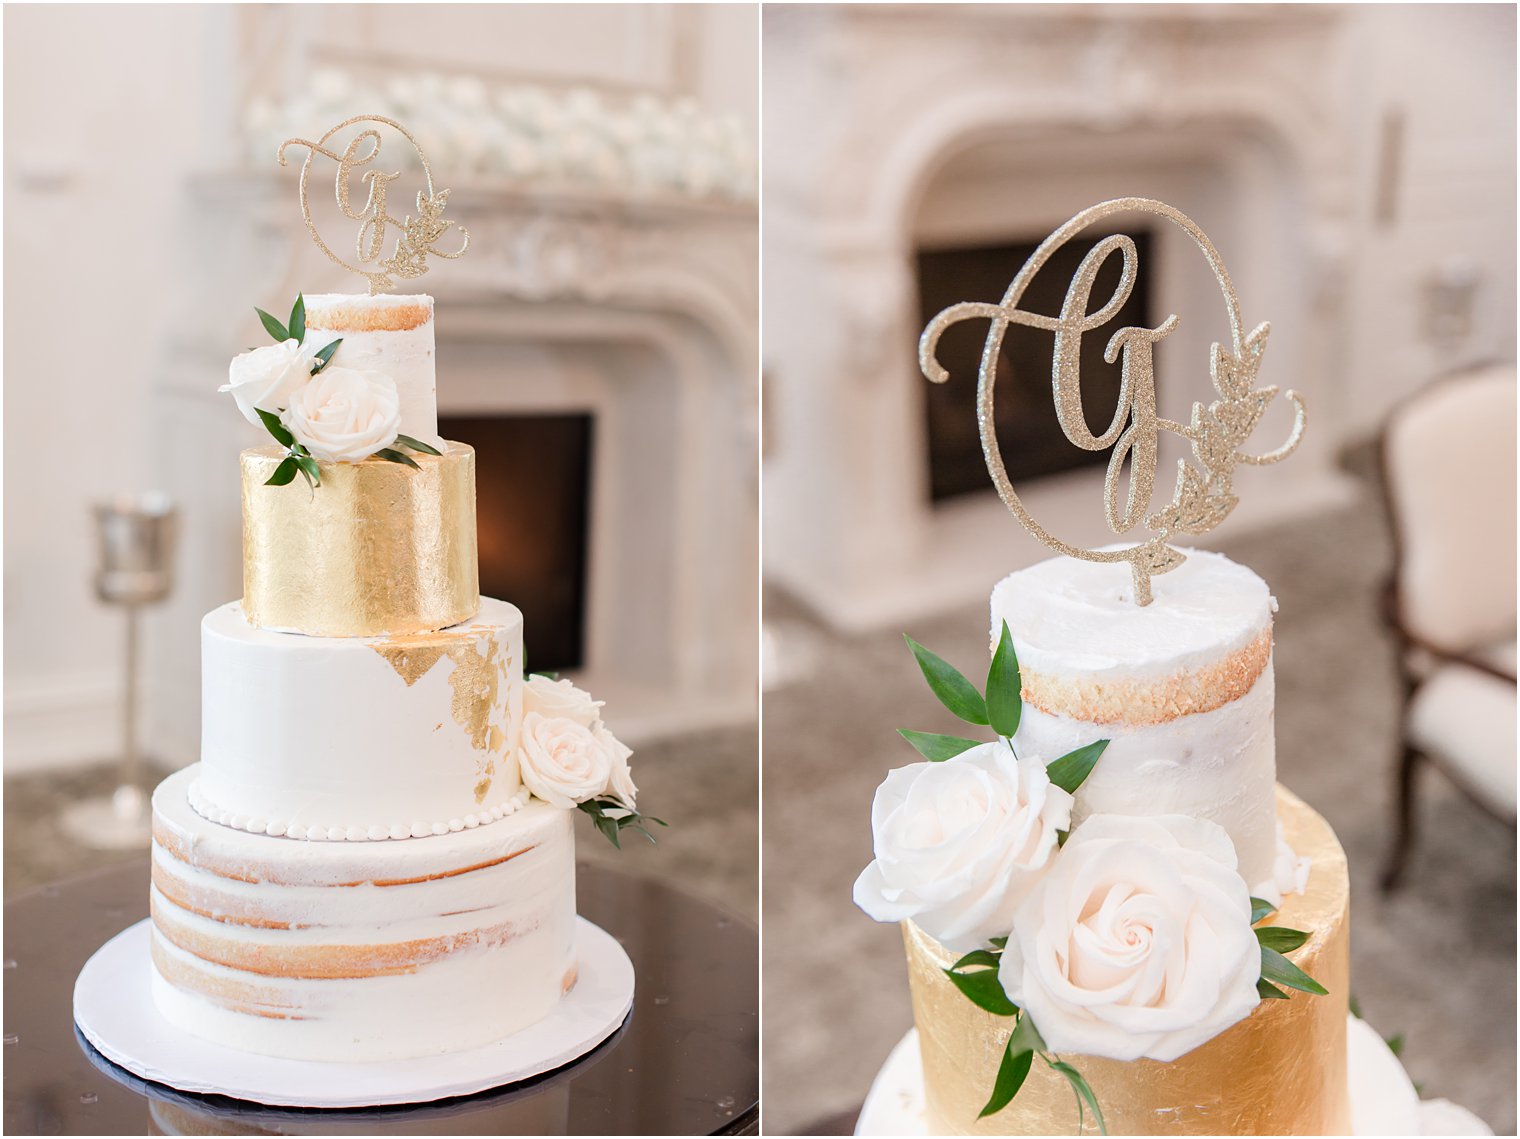 Elegant wedding cake with gold trim